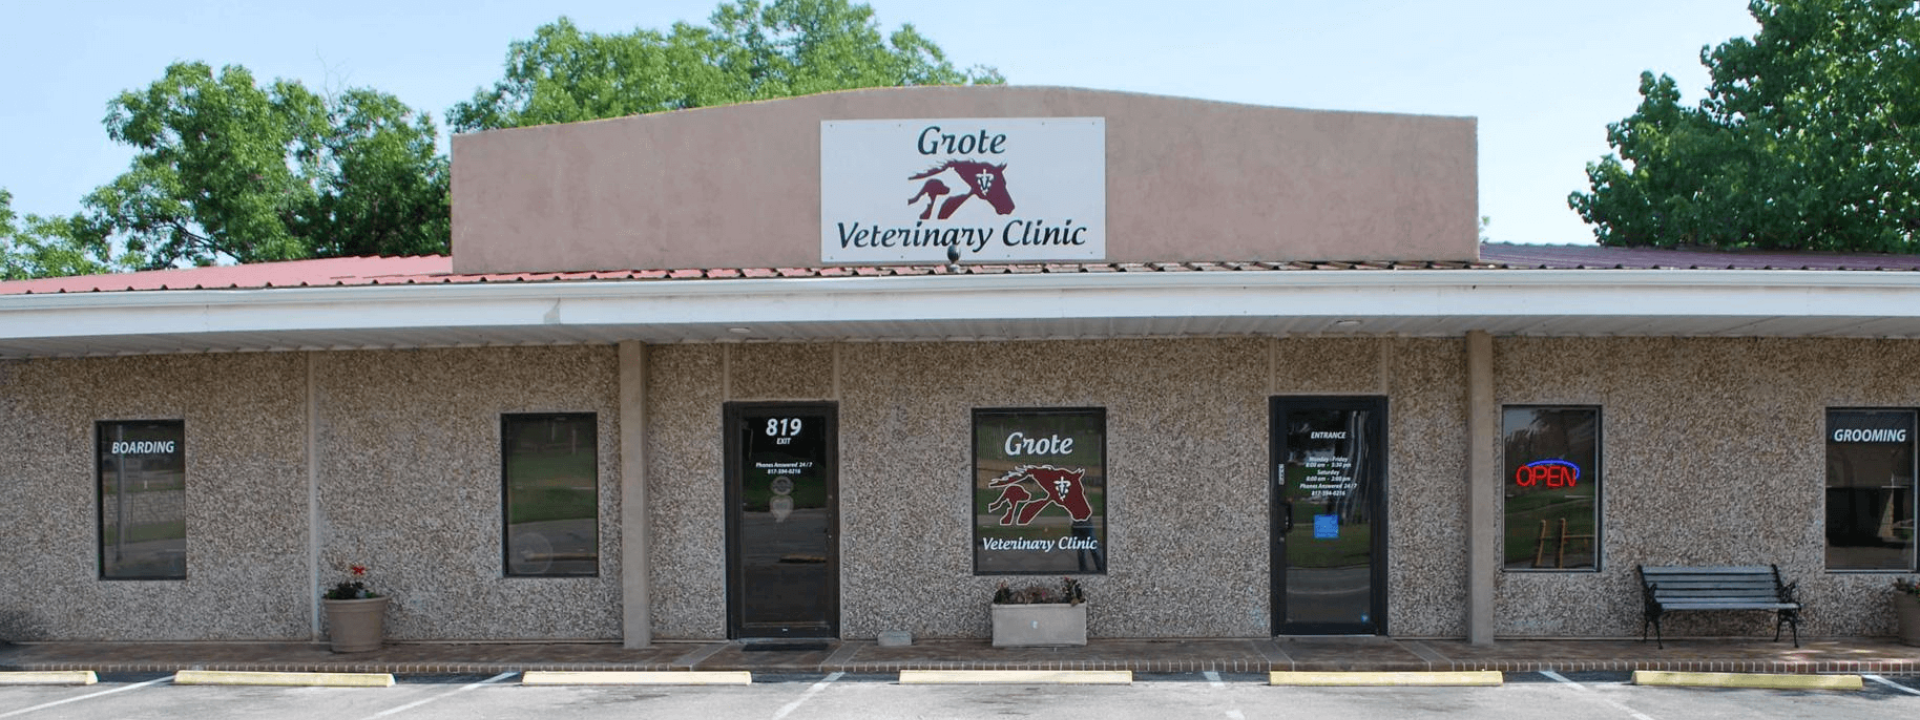 grote-veterinary-clinic